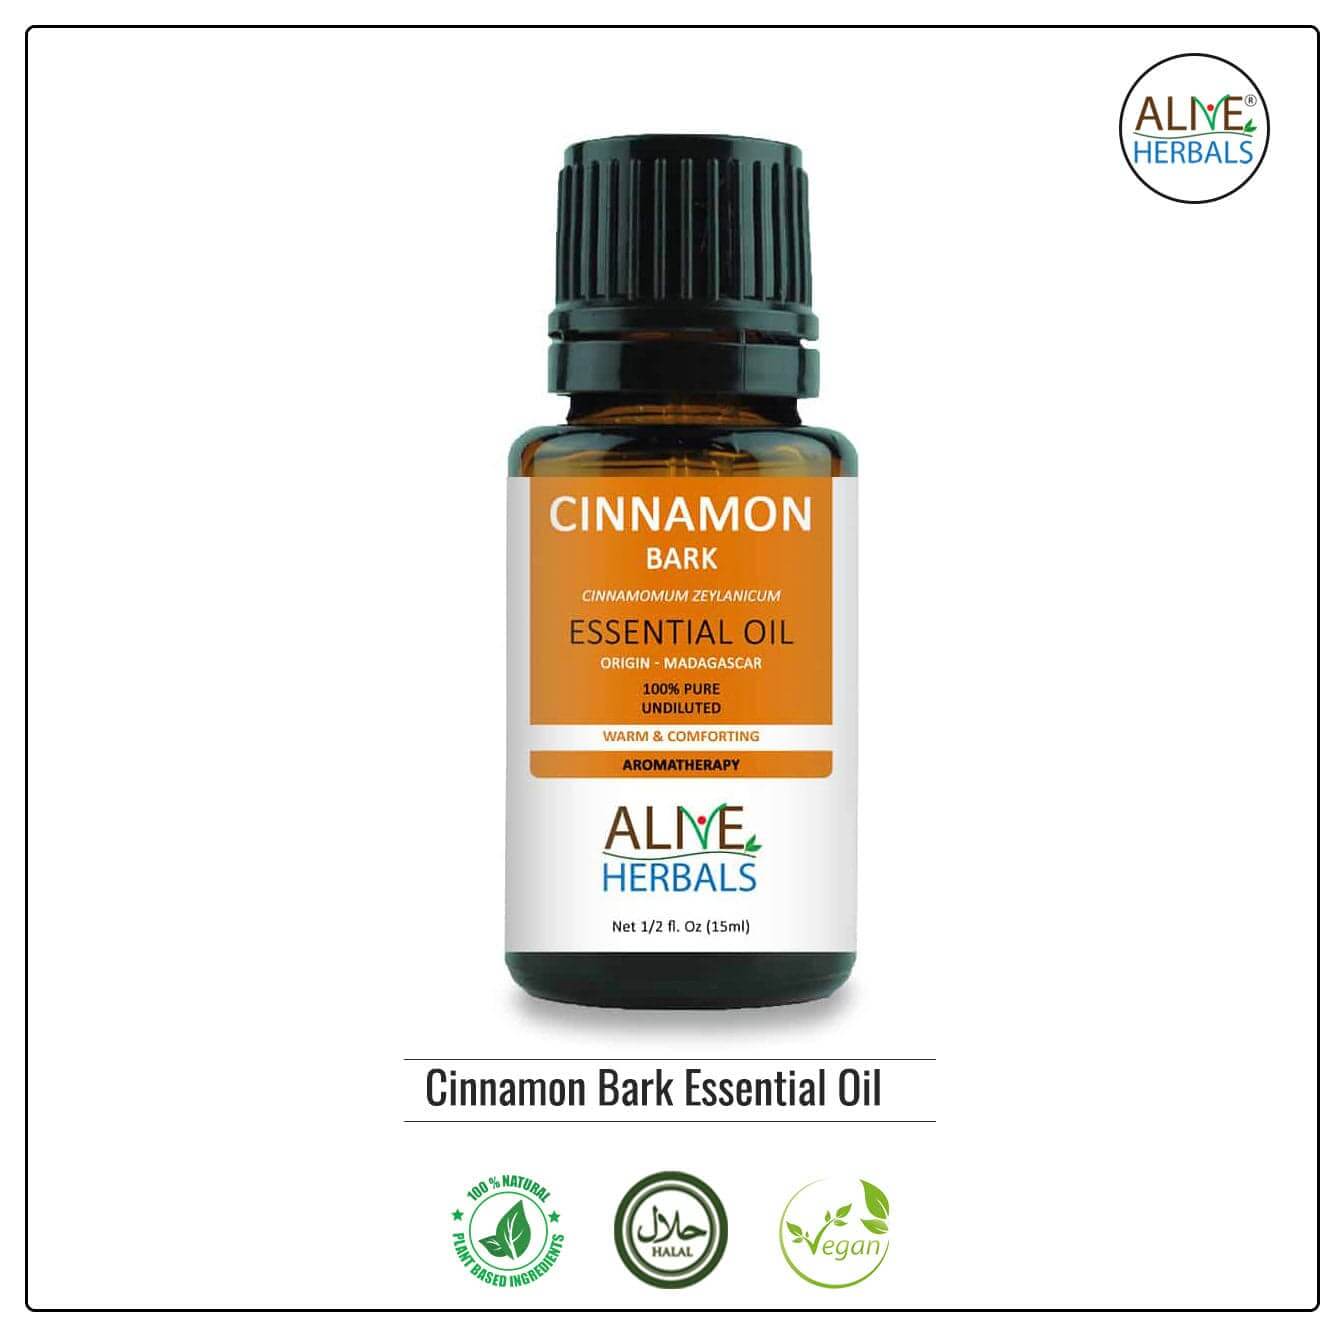 Cinnamon Bark Essential Oil - Buy at Natural Food Store | Alive Herbals.